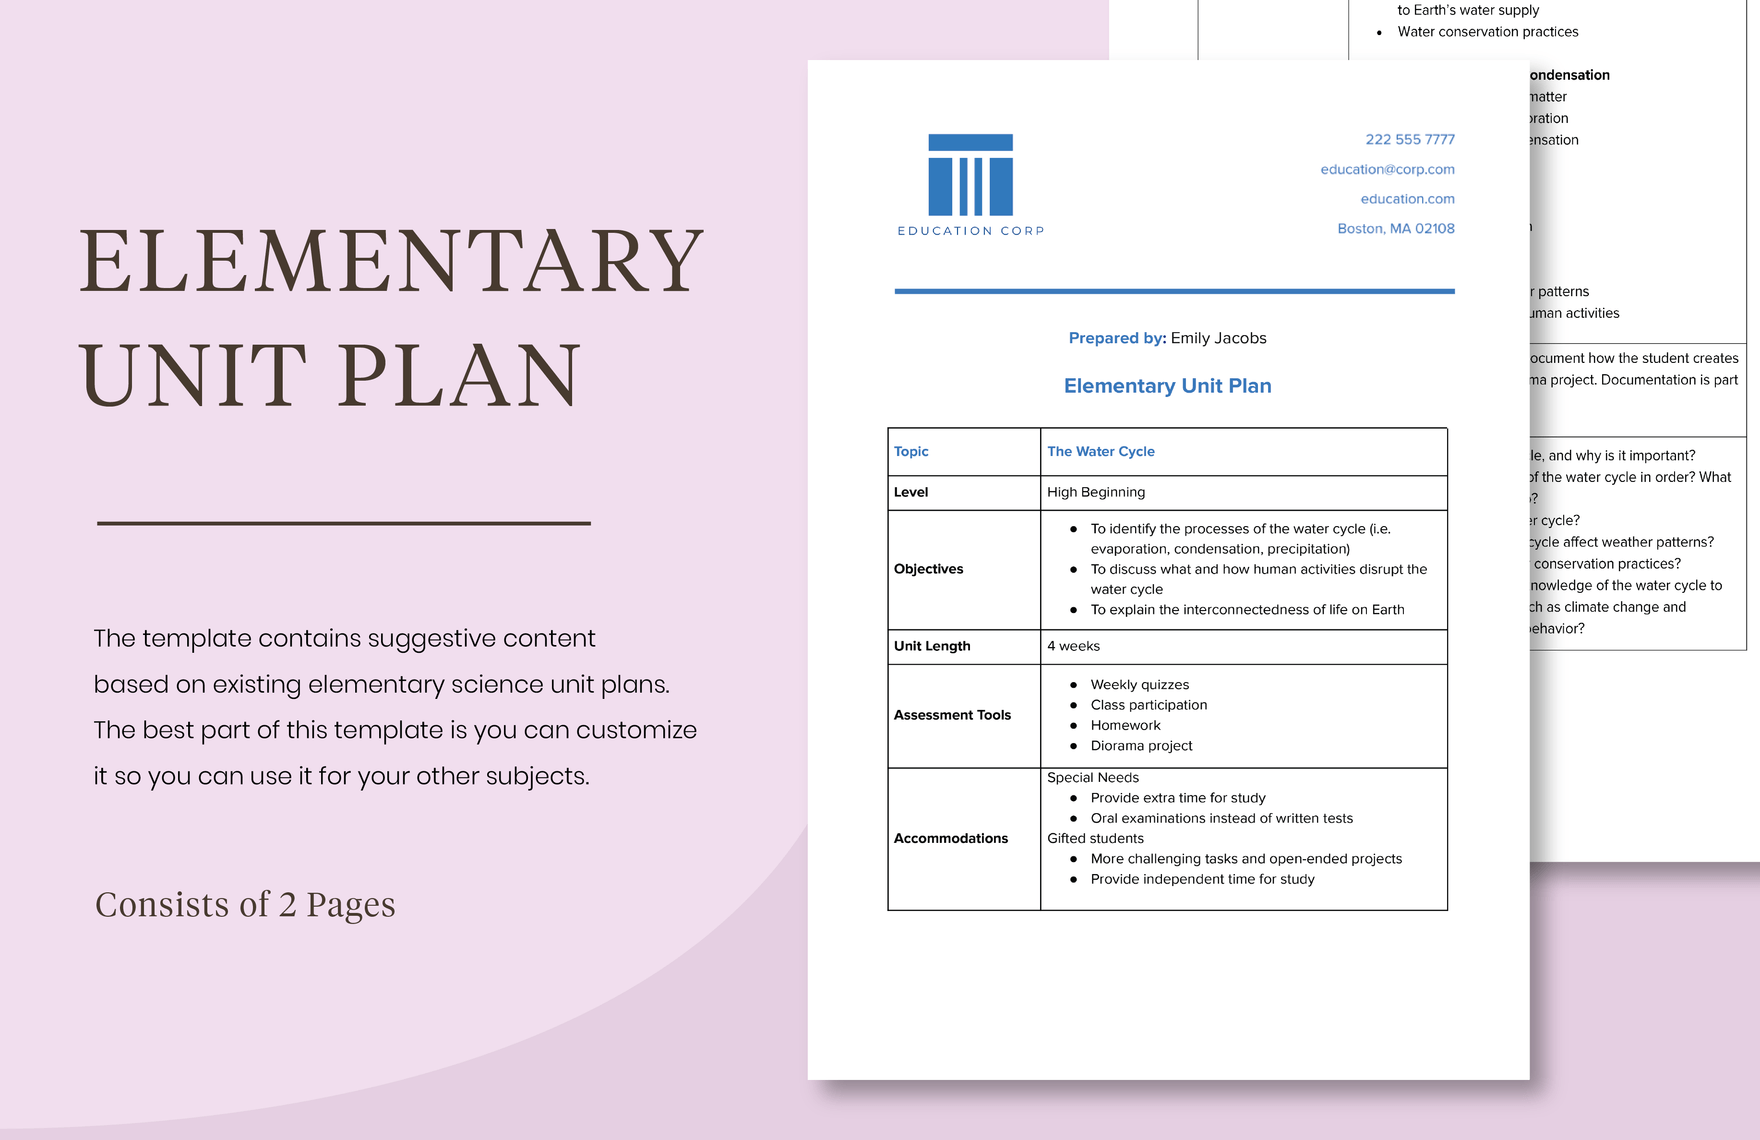 Elementary Unit Plan 